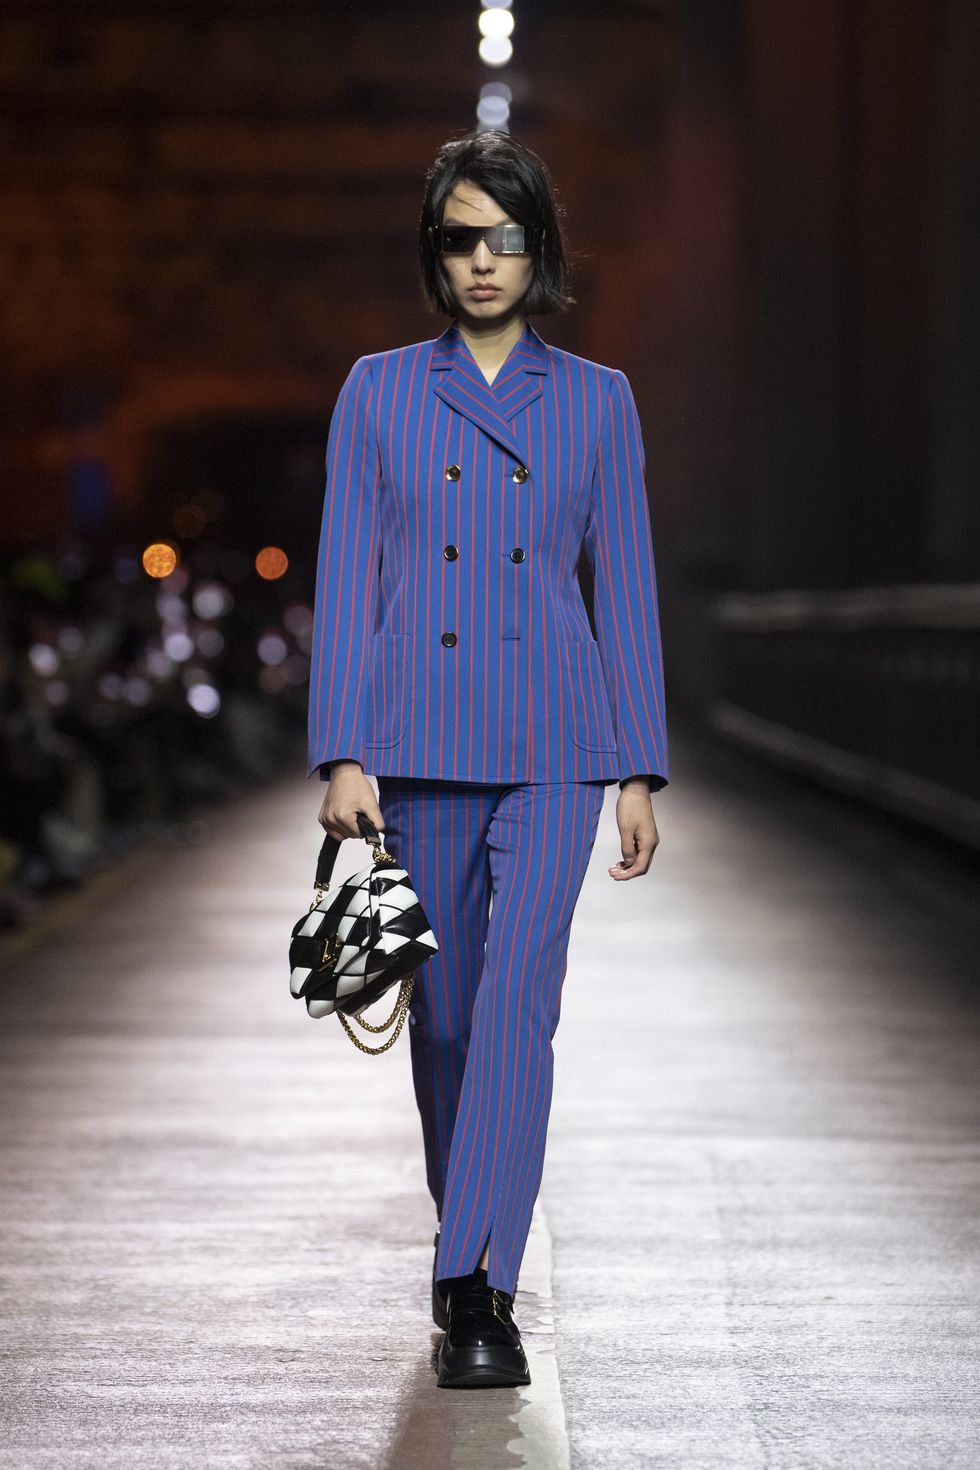 Louis Vuitton Fall 2023 Womenswear Campaign